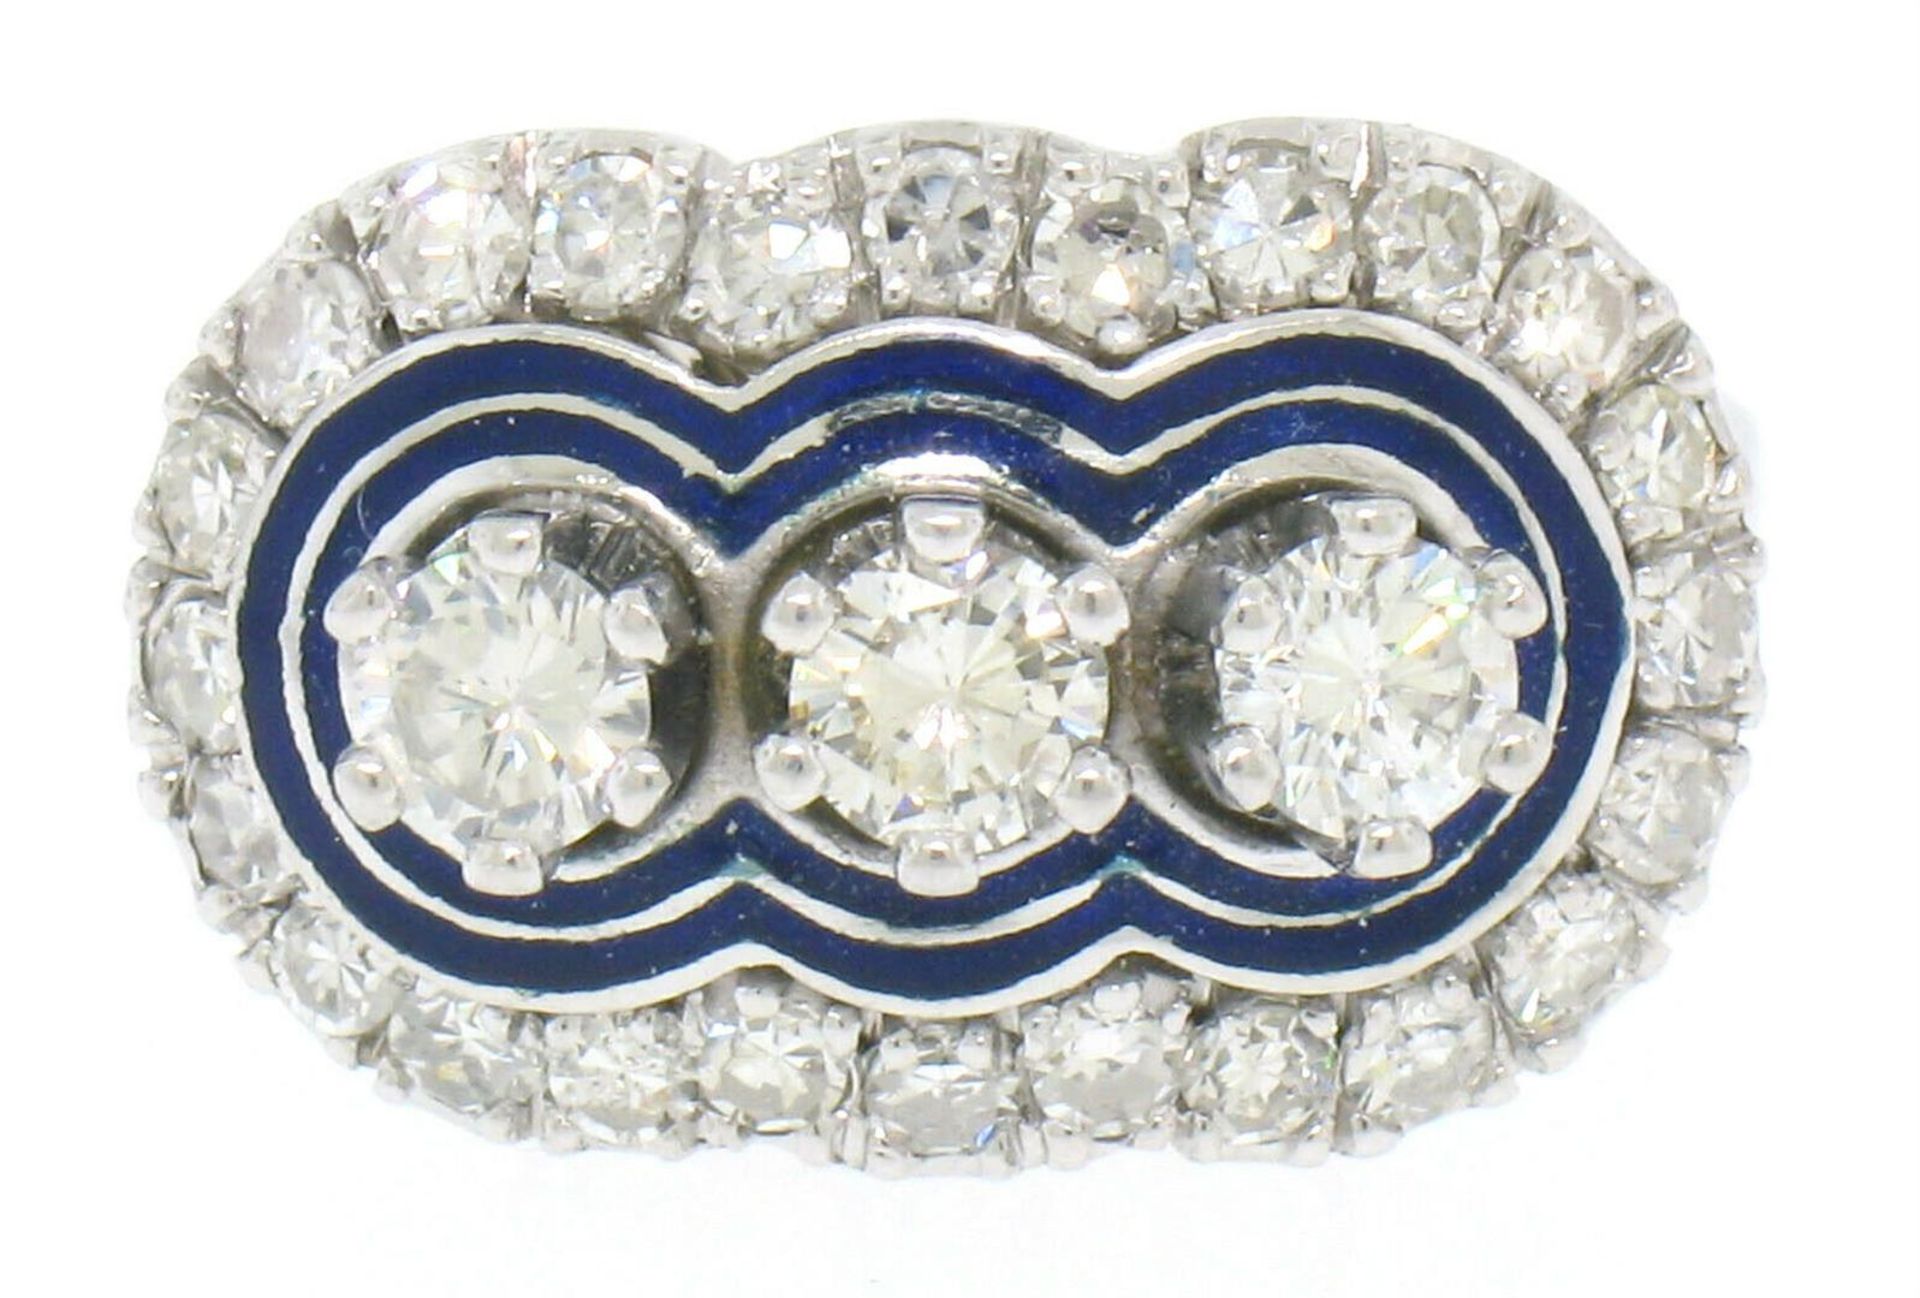 Vintage 18kt White Gold and Blue Enamel 1.15ctw Diamond Ring - Image 3 of 5